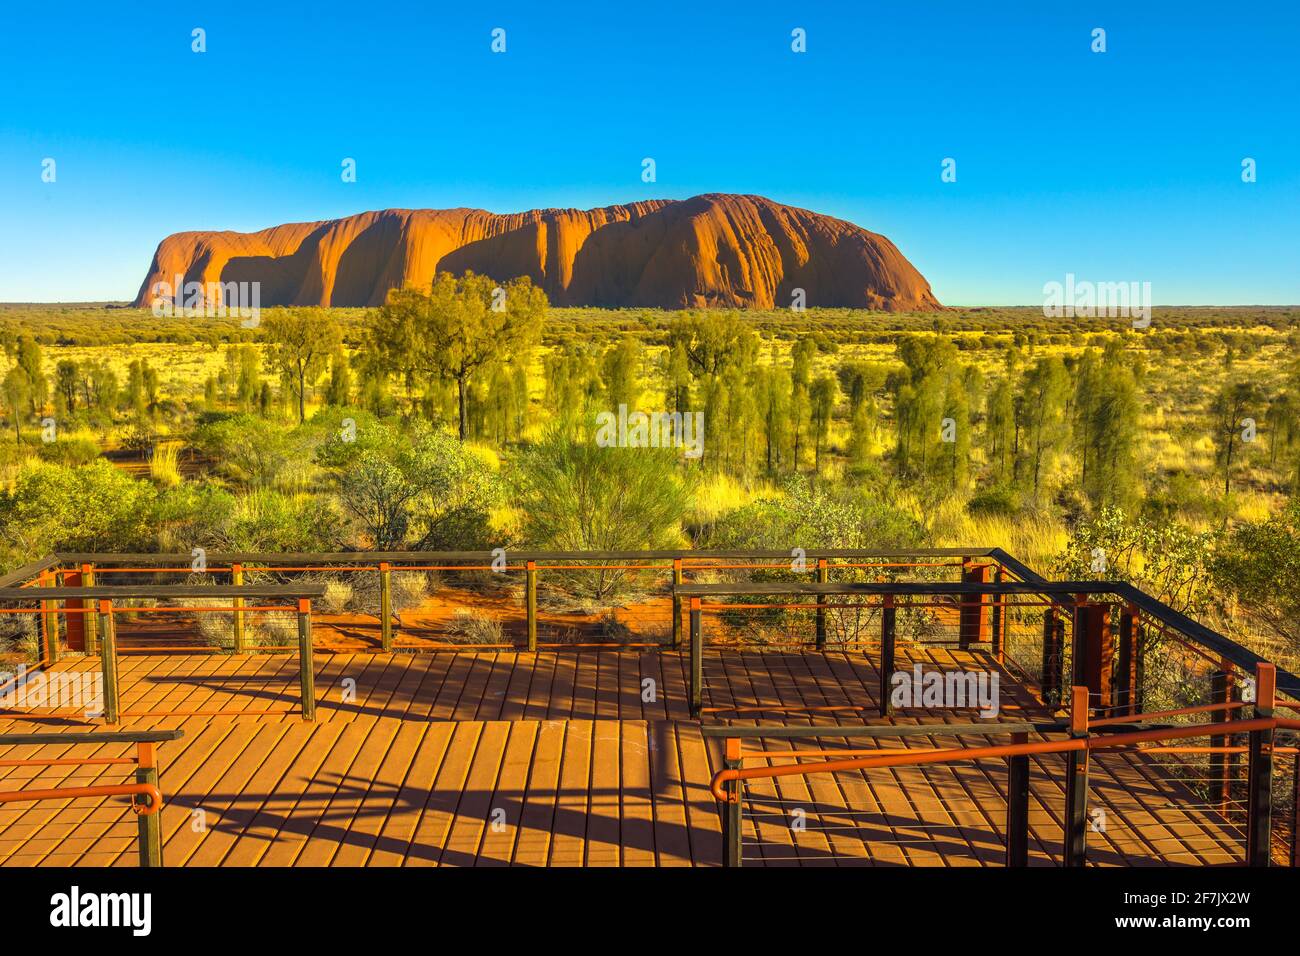 Uluru monolith, the domes of Kata Tjuta and platforms viewing area at sunlight in Uluru-Kata Tjuta National Park, Australia, Northern Territory Stock Photo